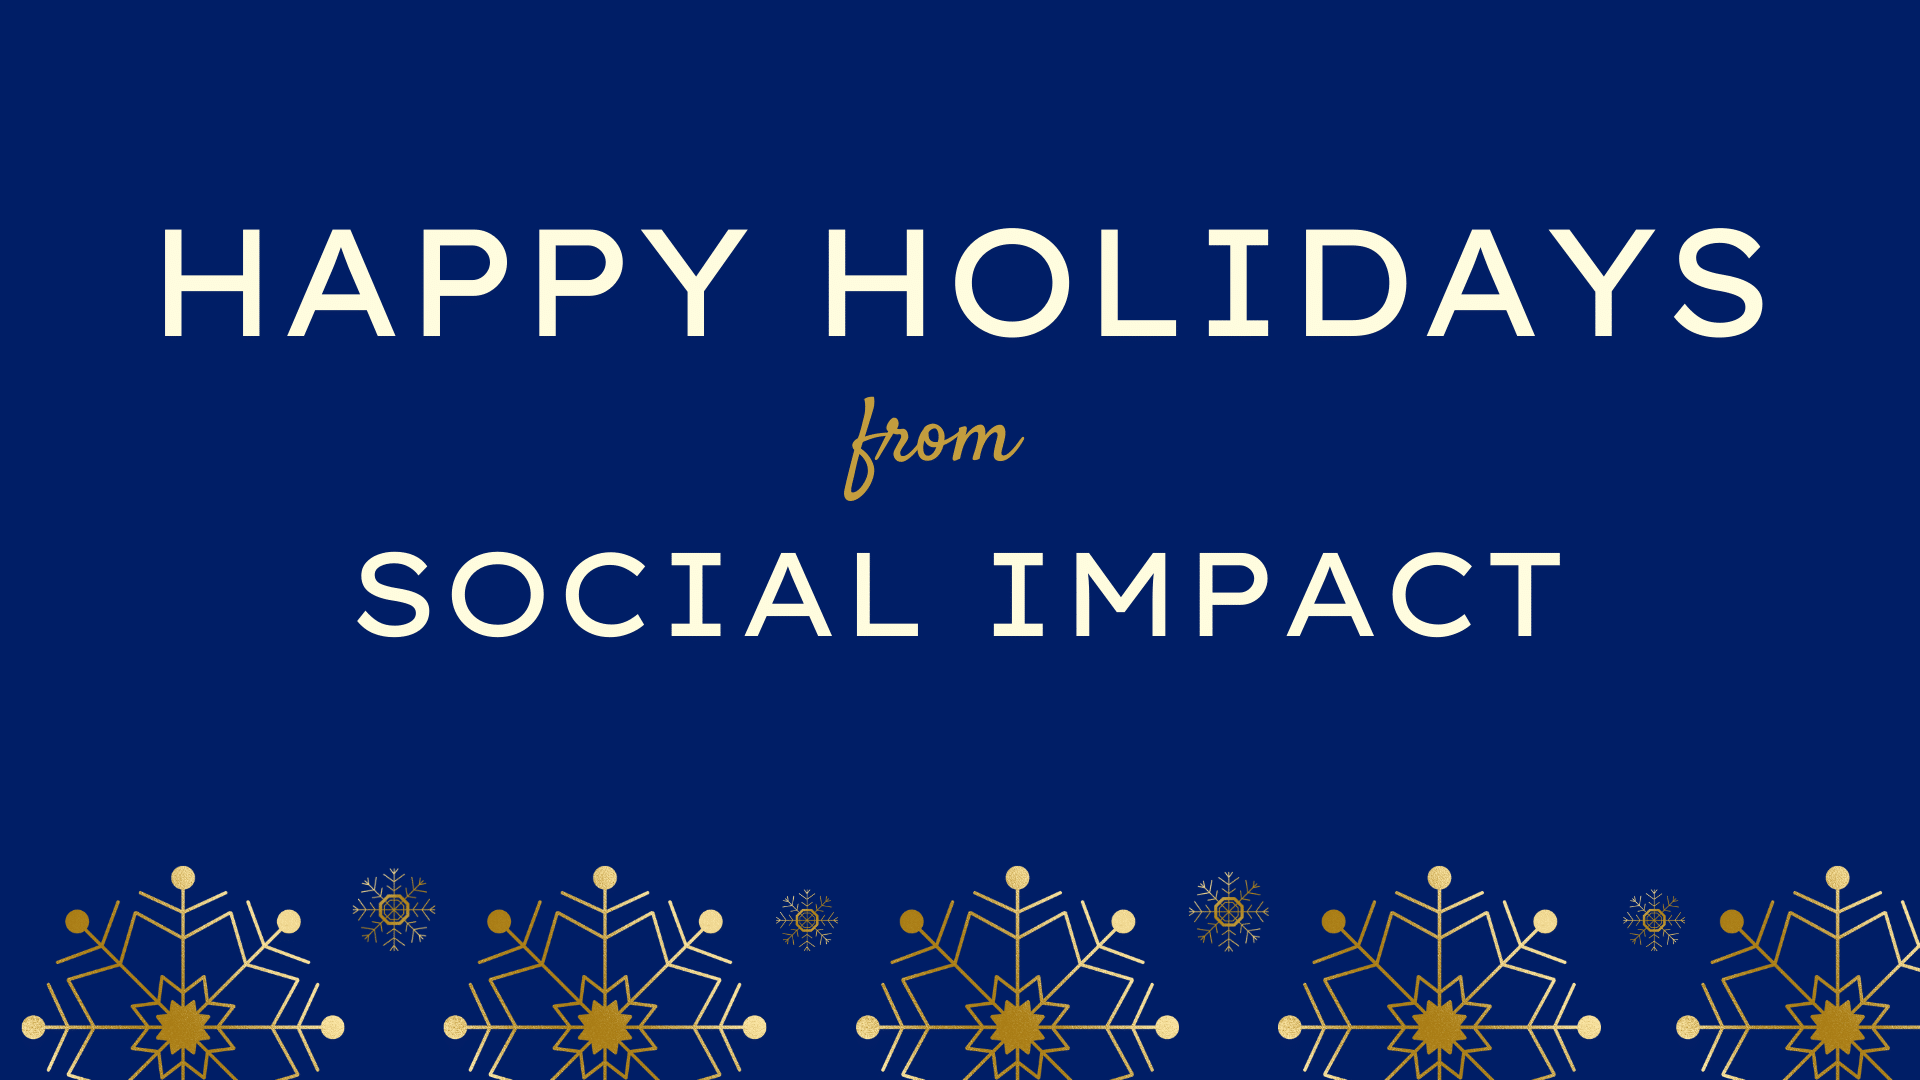 Happy Holidays from Social Impact!